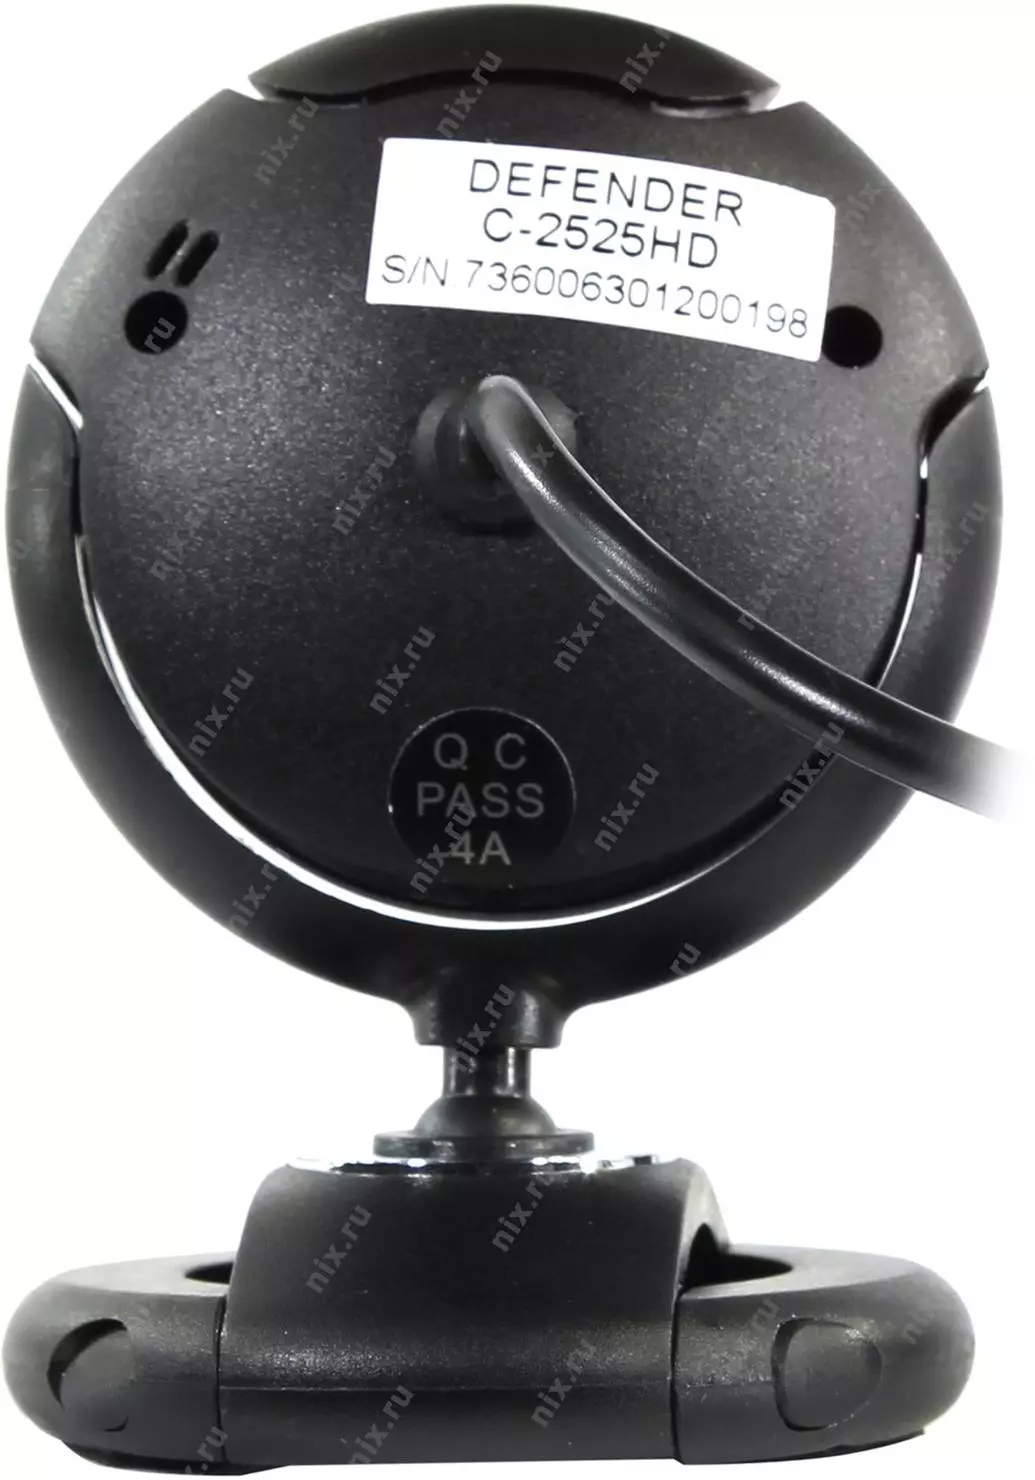 Defender c 2525hd. Веб-камера Defender c-2525hd (USB2.0, 1600x1200, микрофон) <63252>. Defender c-2525. Web камера Defender с2525. Defender c 2525hd распиновка.